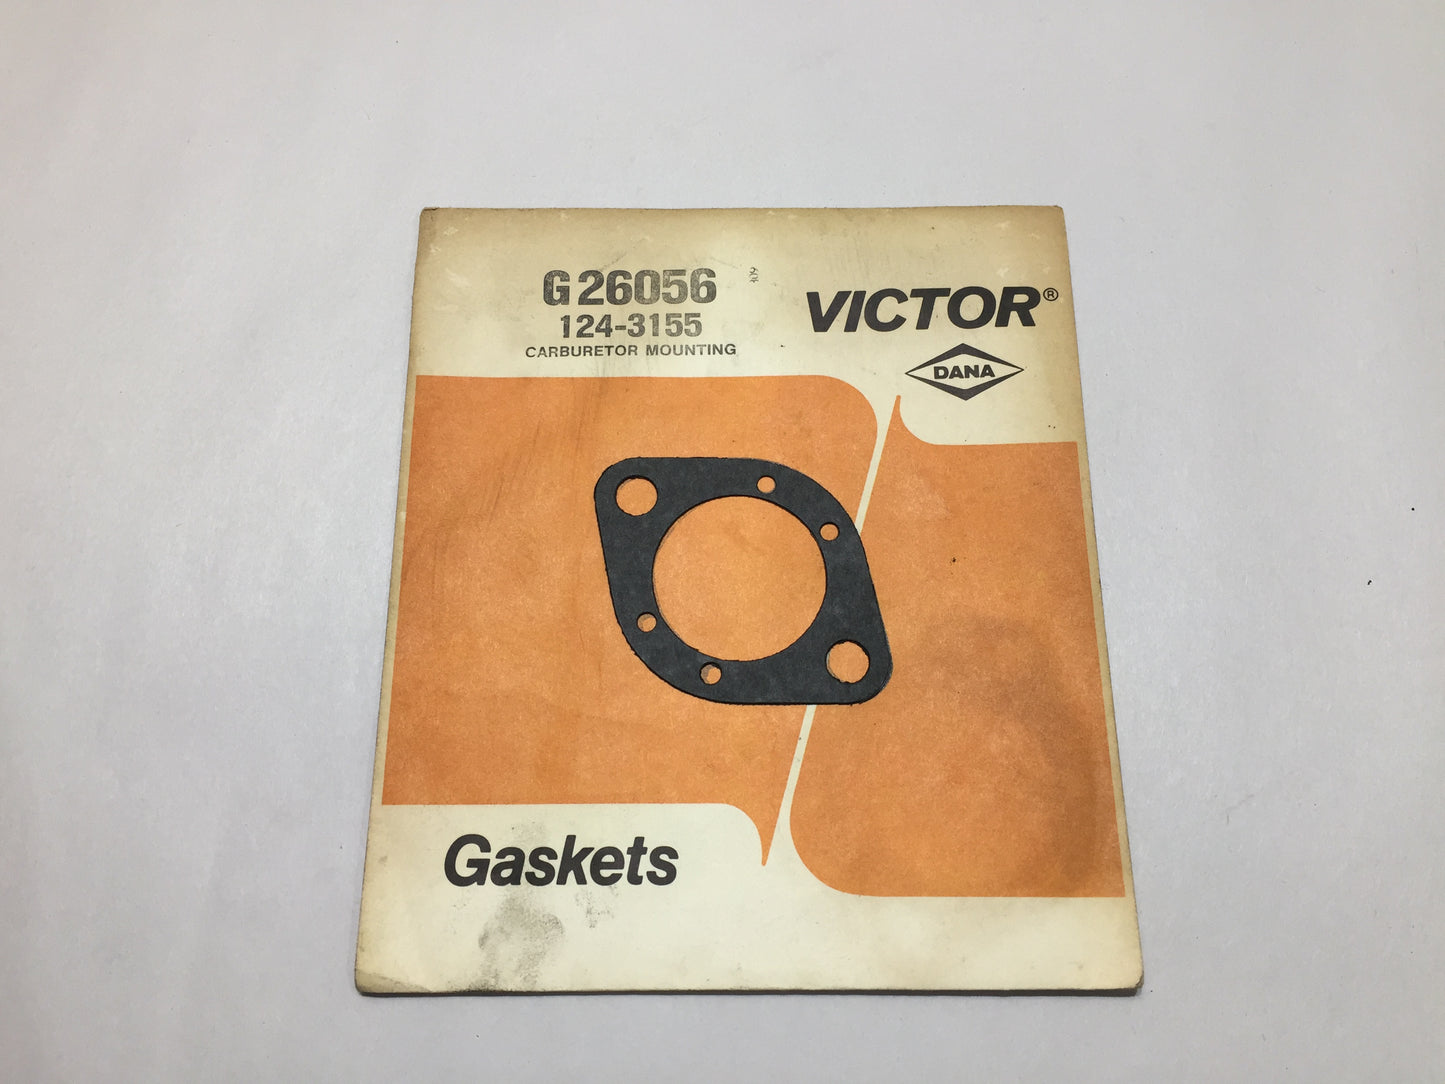 G26056 Victor Dana Carburetor Mounting Gasket